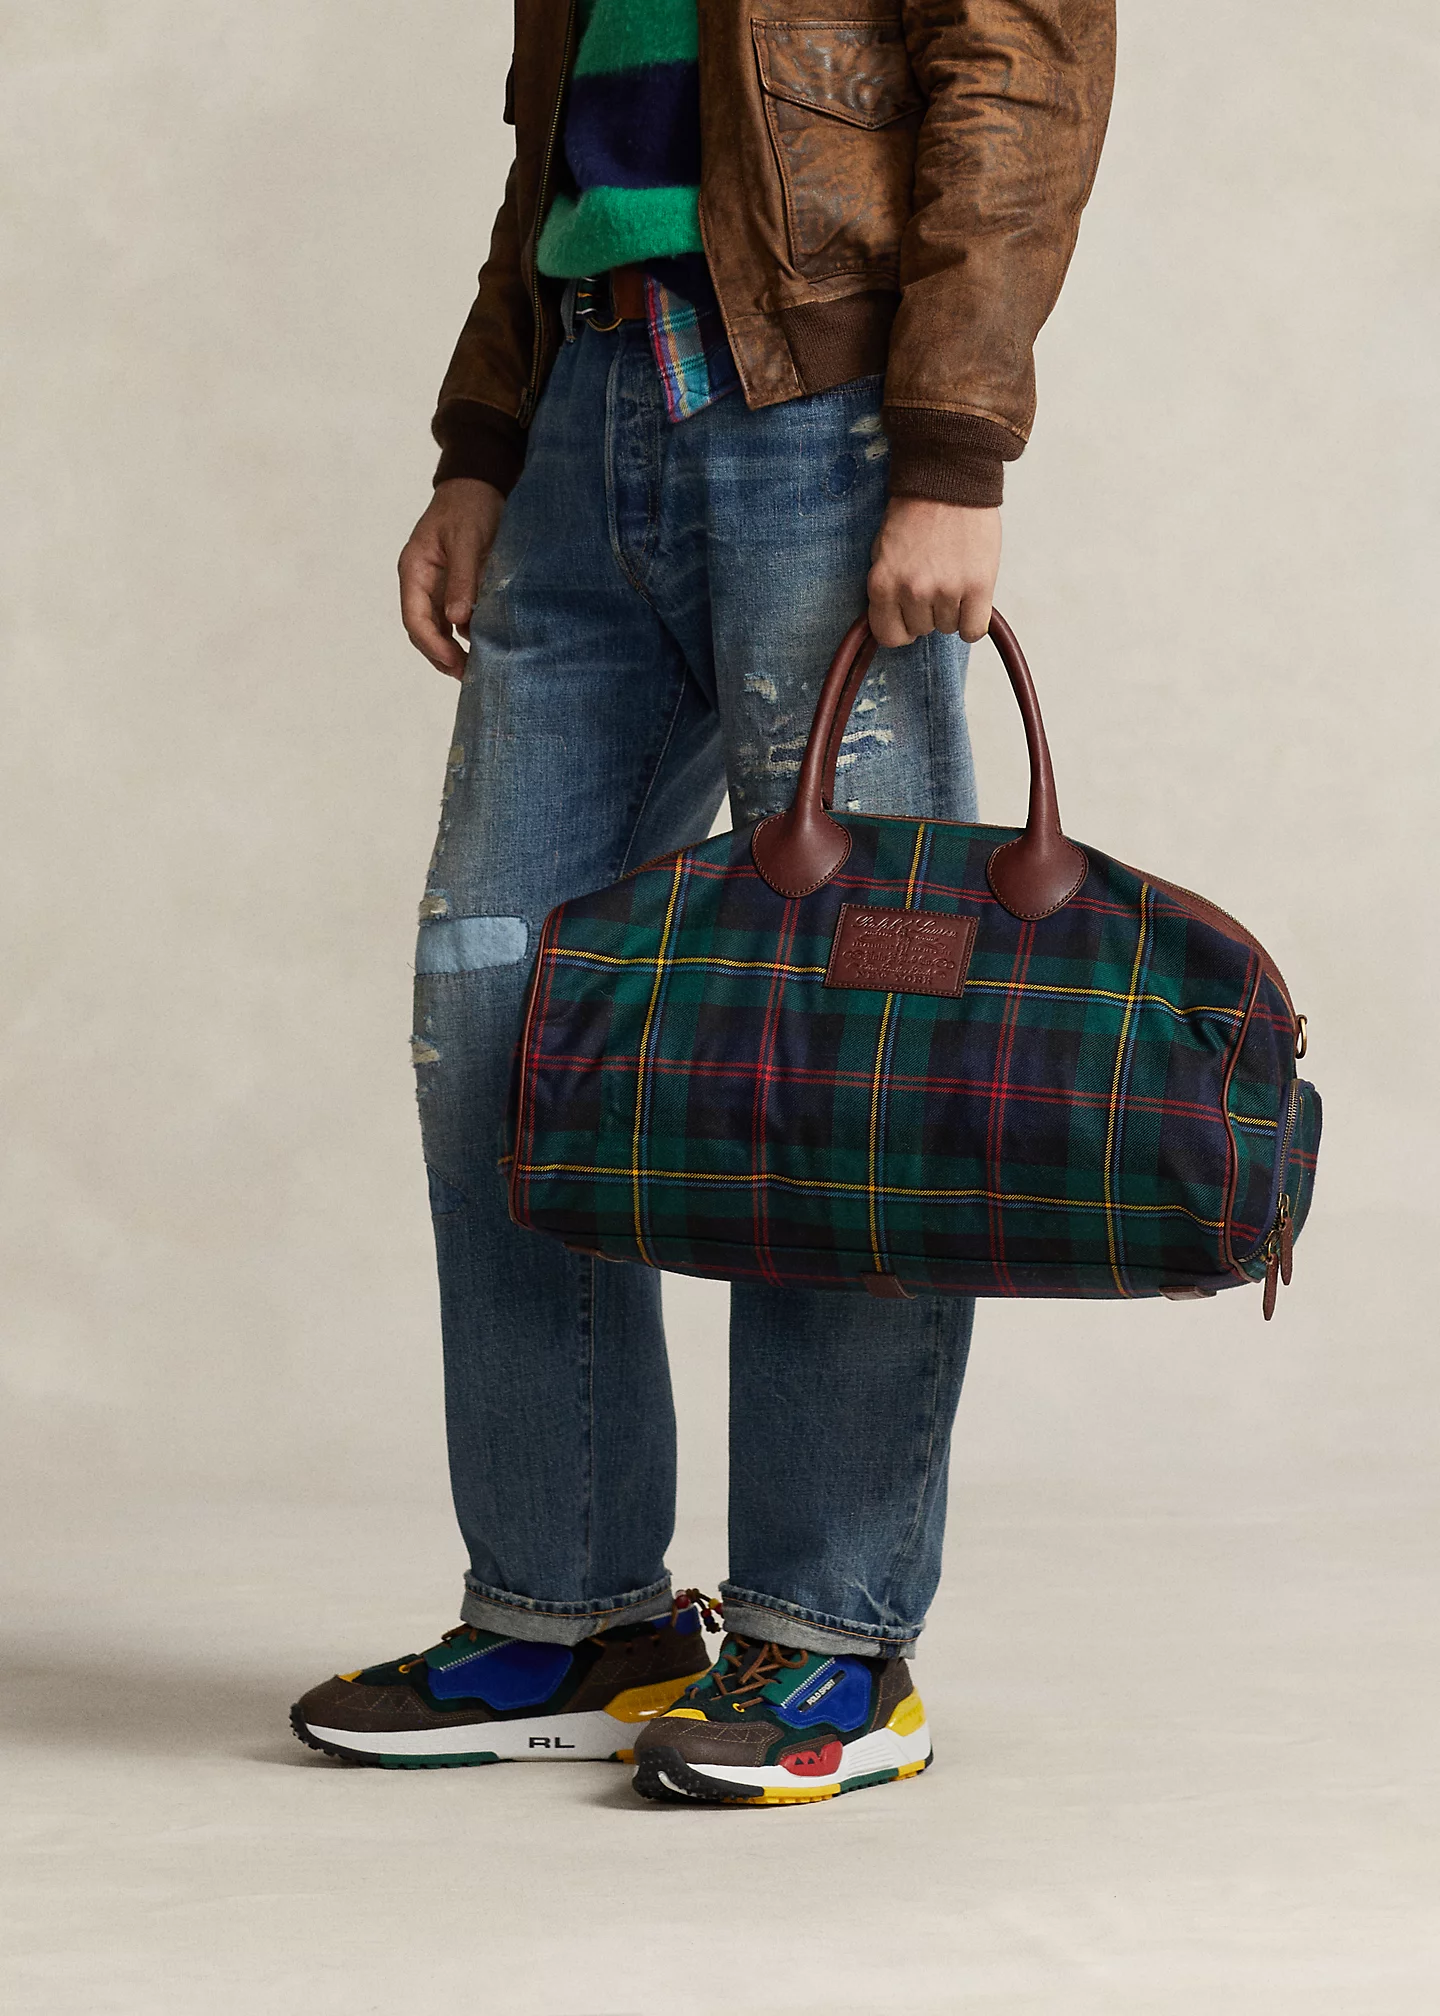 stylish handbagsHeritage Plaid Wool & Leather Duffel-,$68.69-5